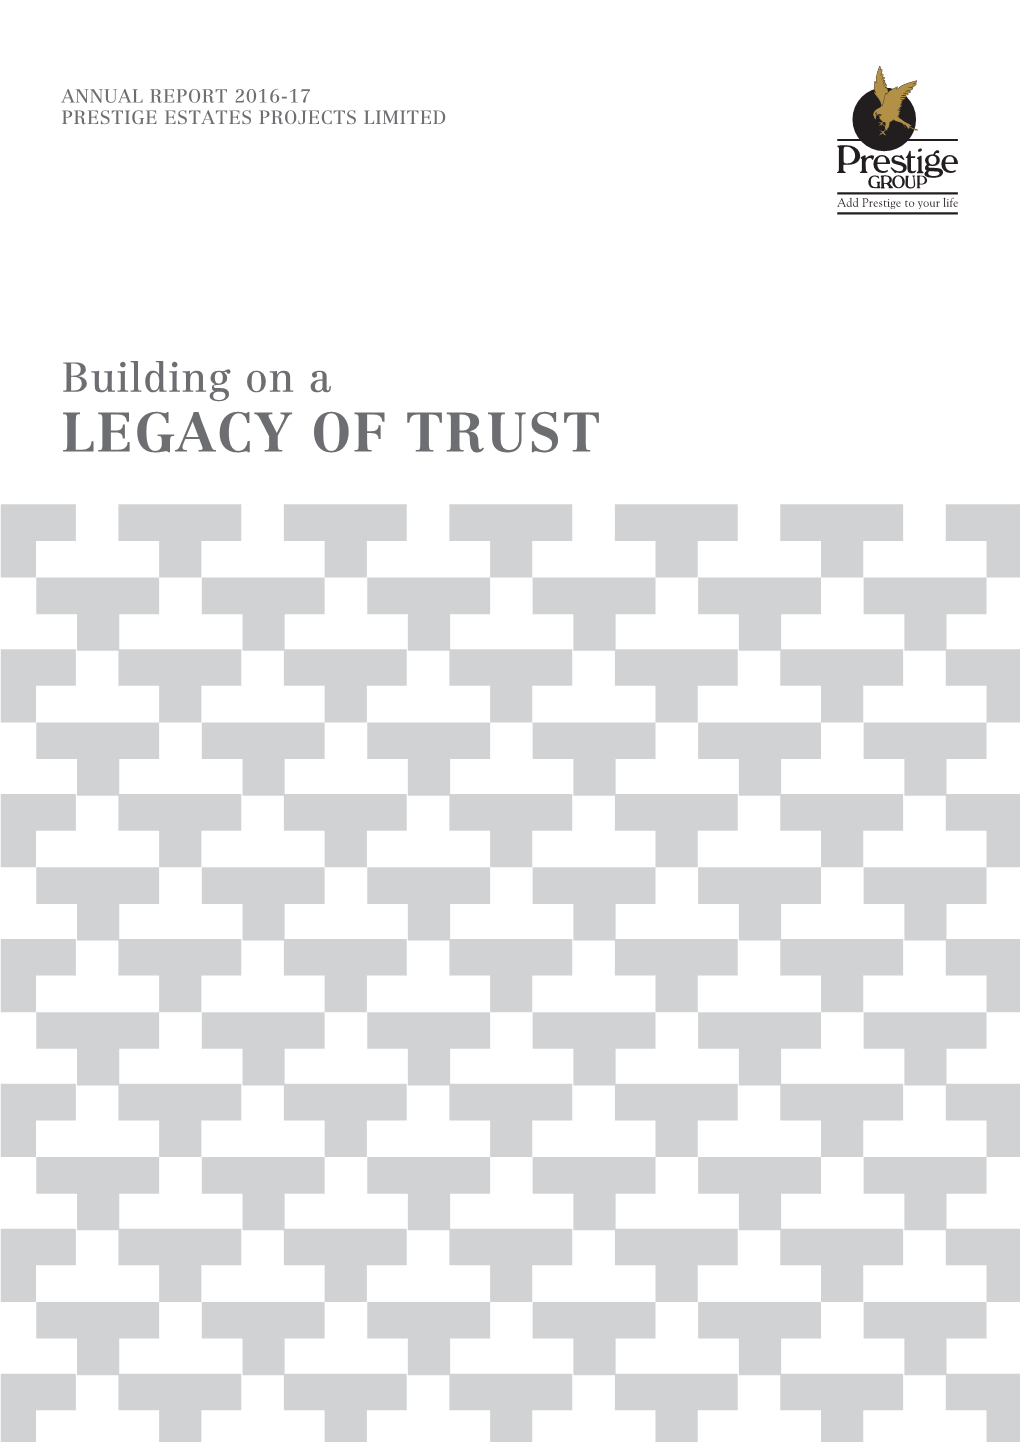 LEGACY of TRUST Key Highlights